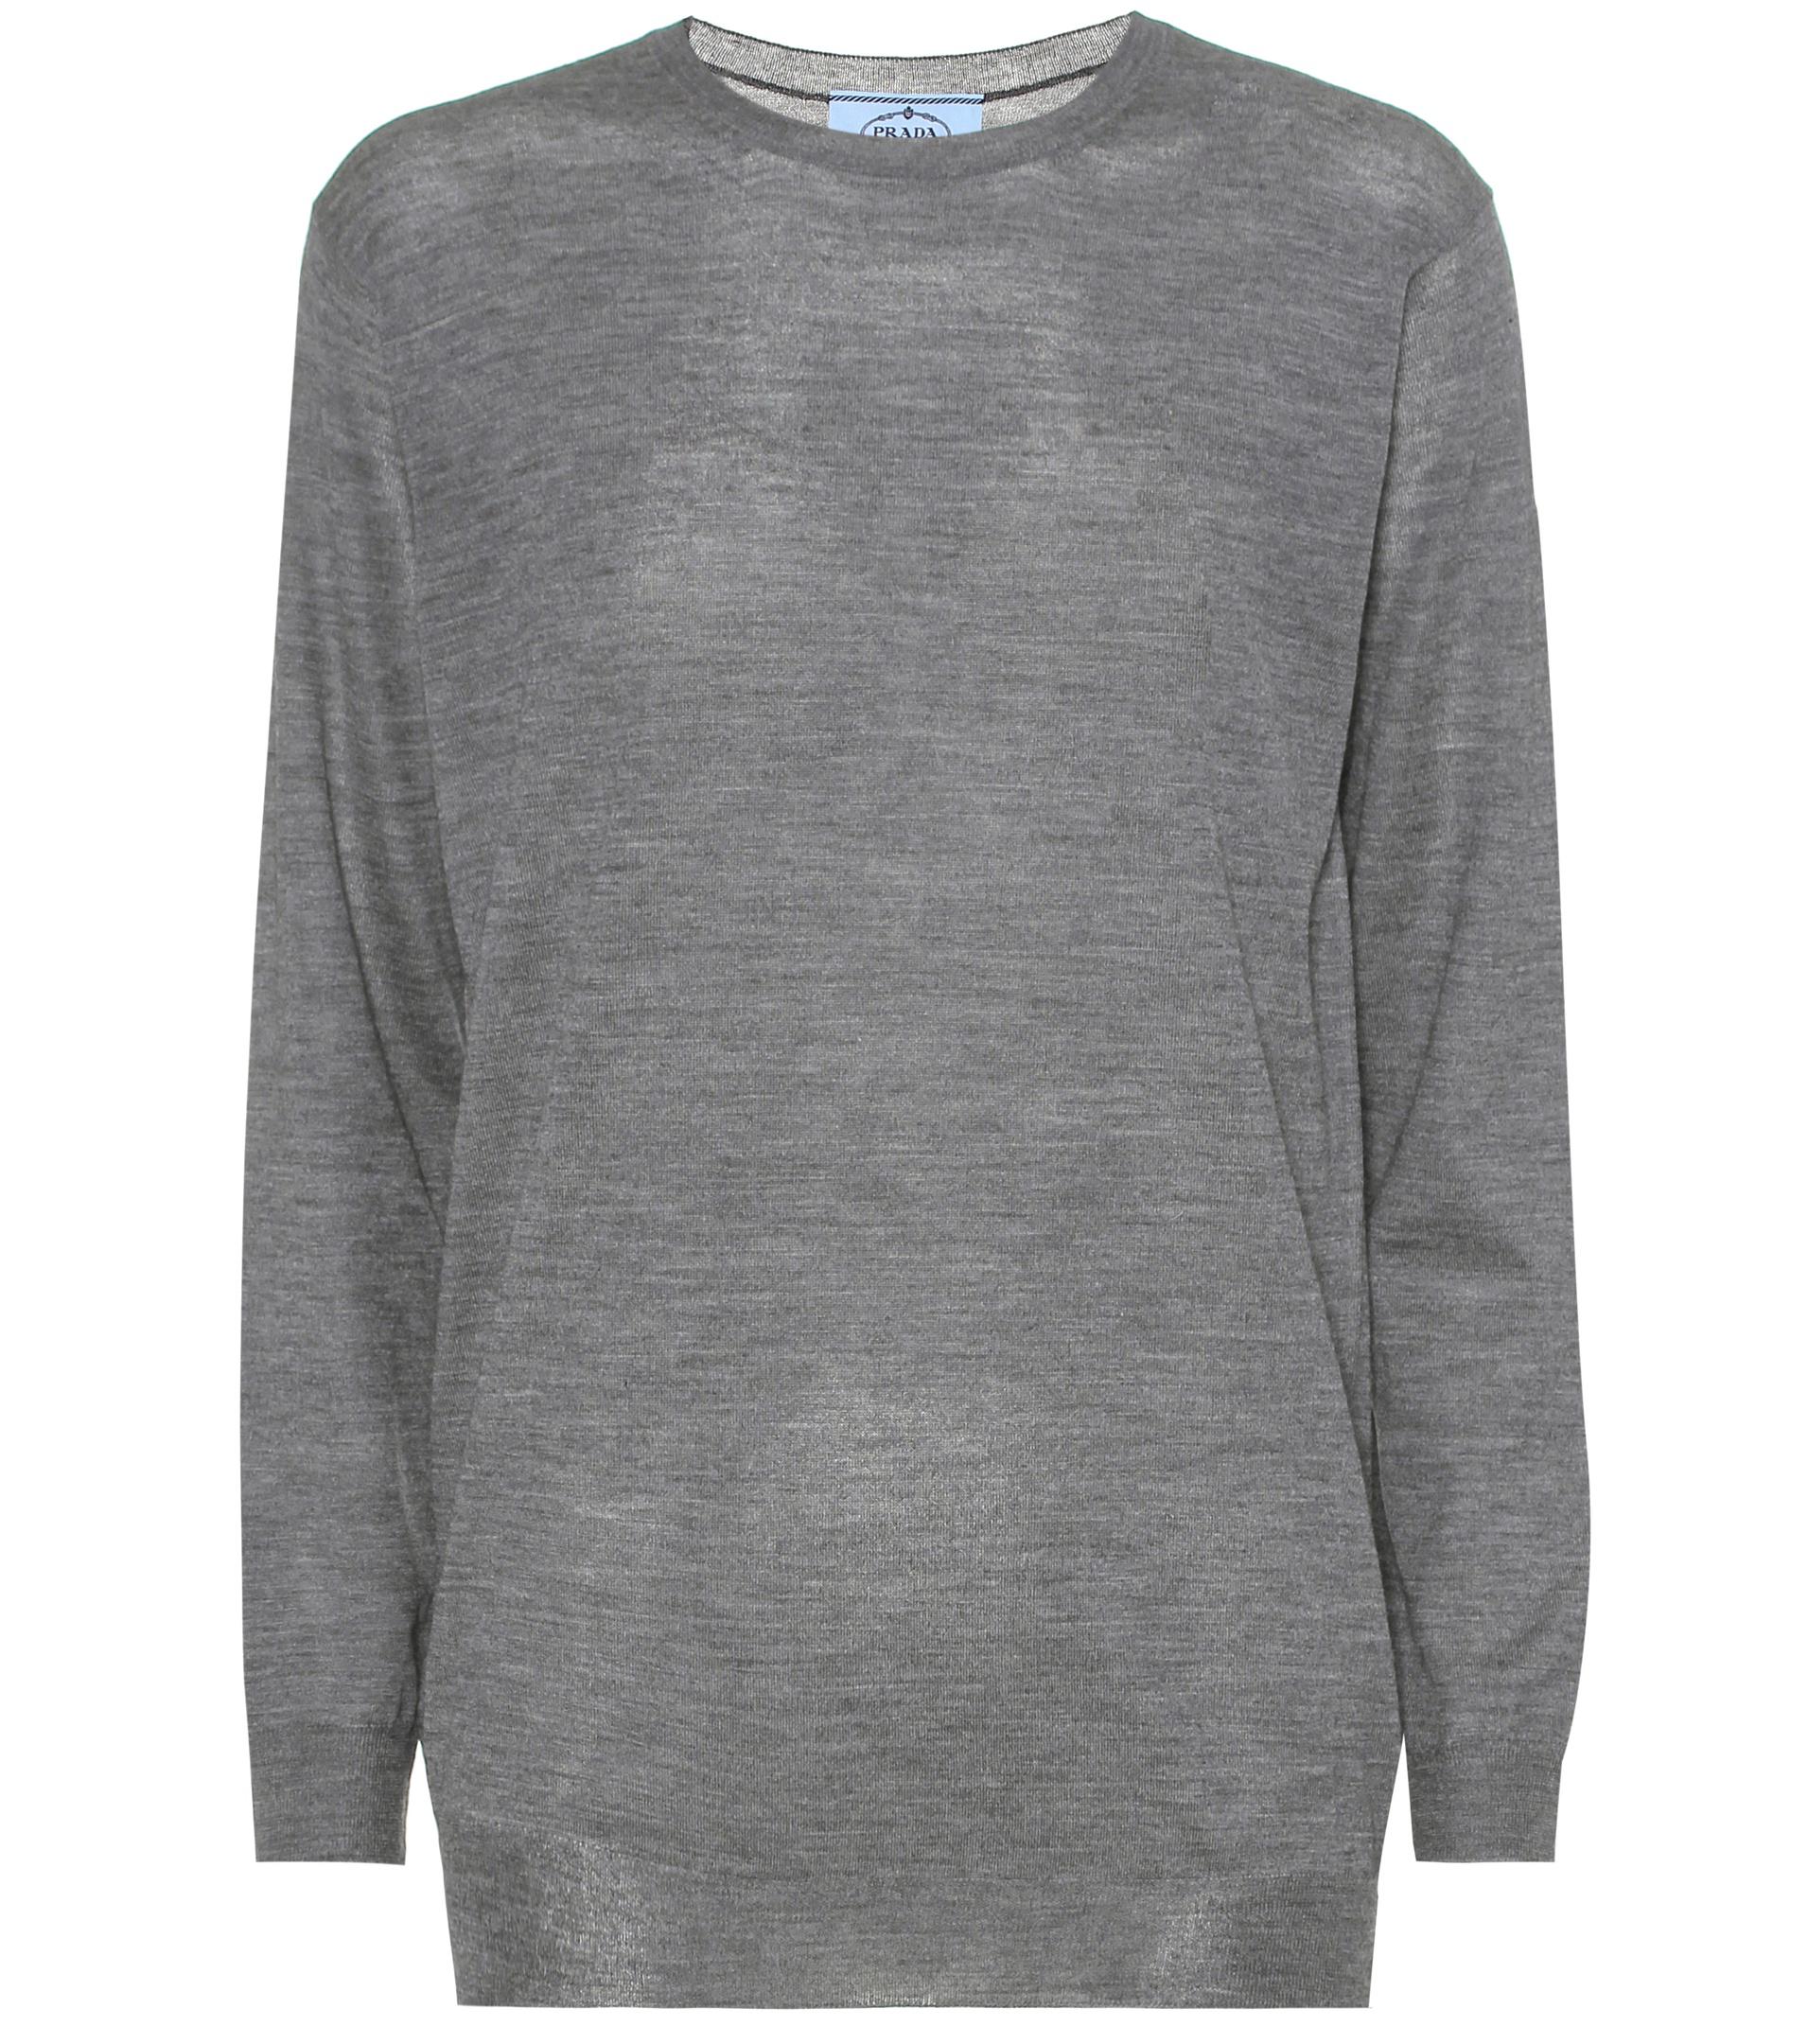 Prada Virgin Wool Sweater in Grey (Gray) - Lyst